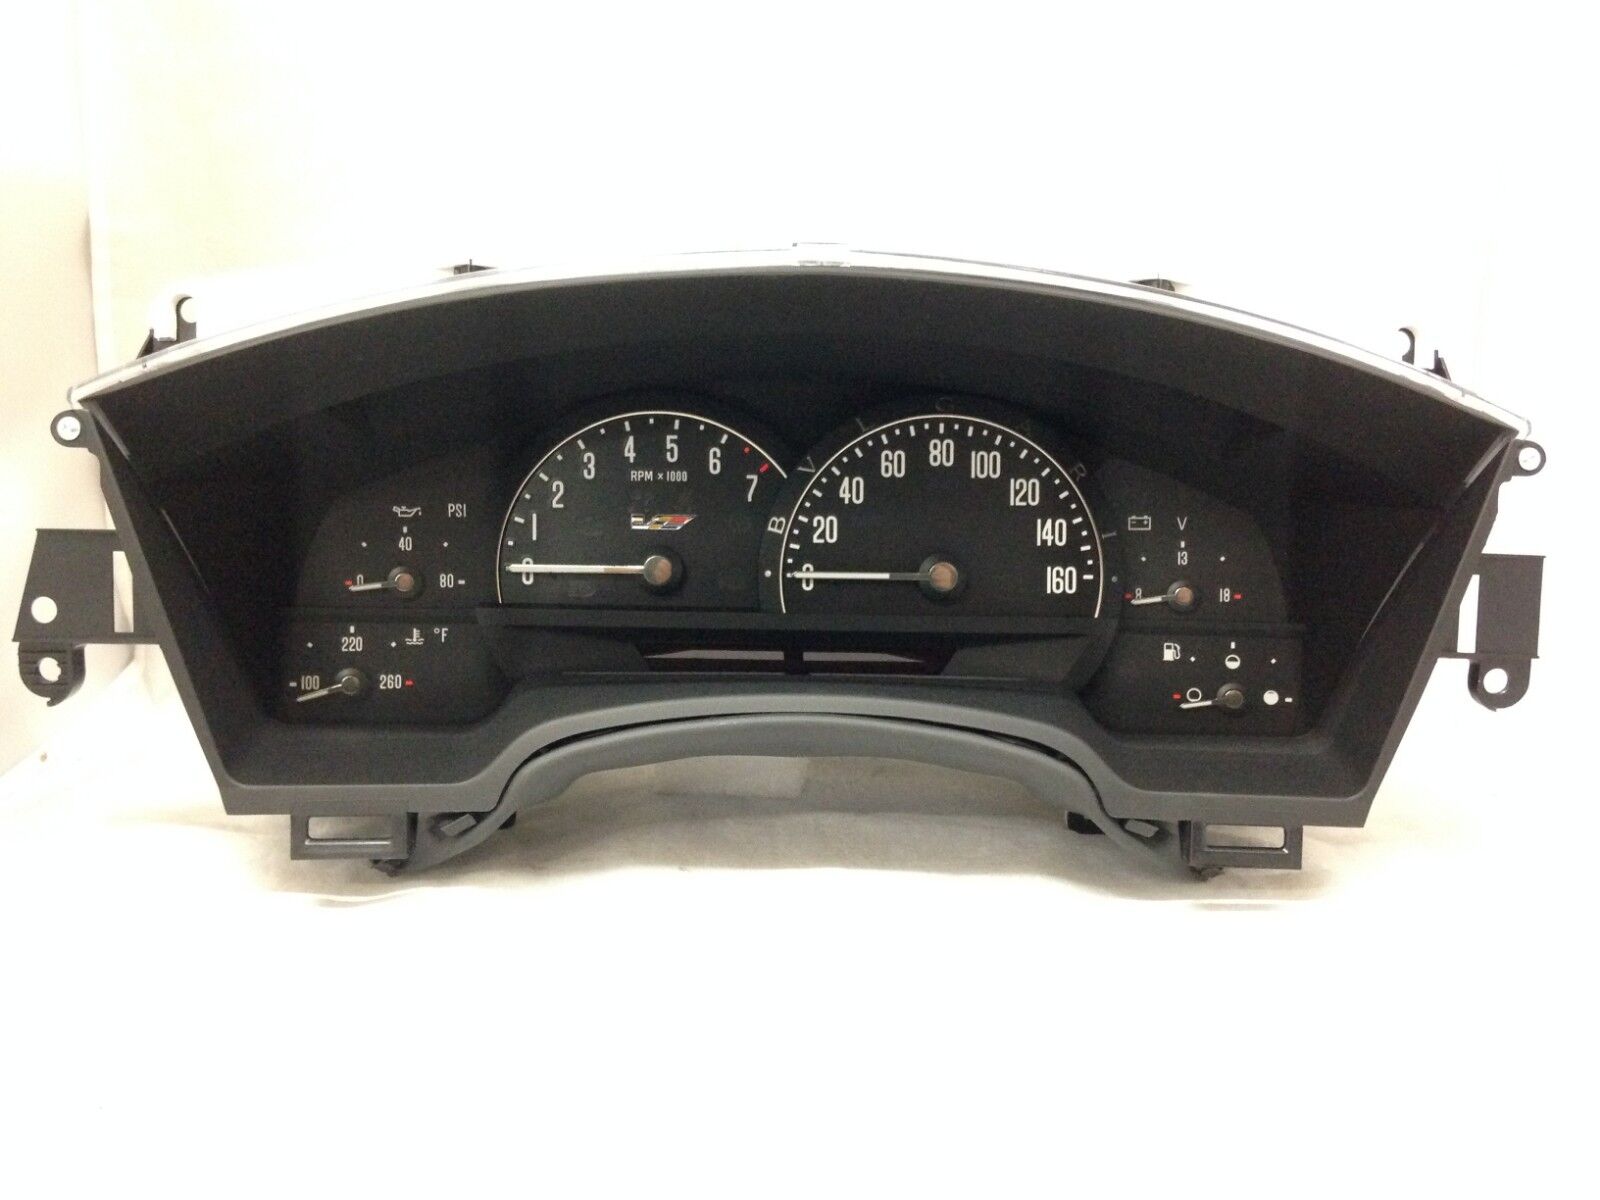 XLR-V 2006-08 160mph instrument panel dash gauge cluster. NEW in GM box Speedo